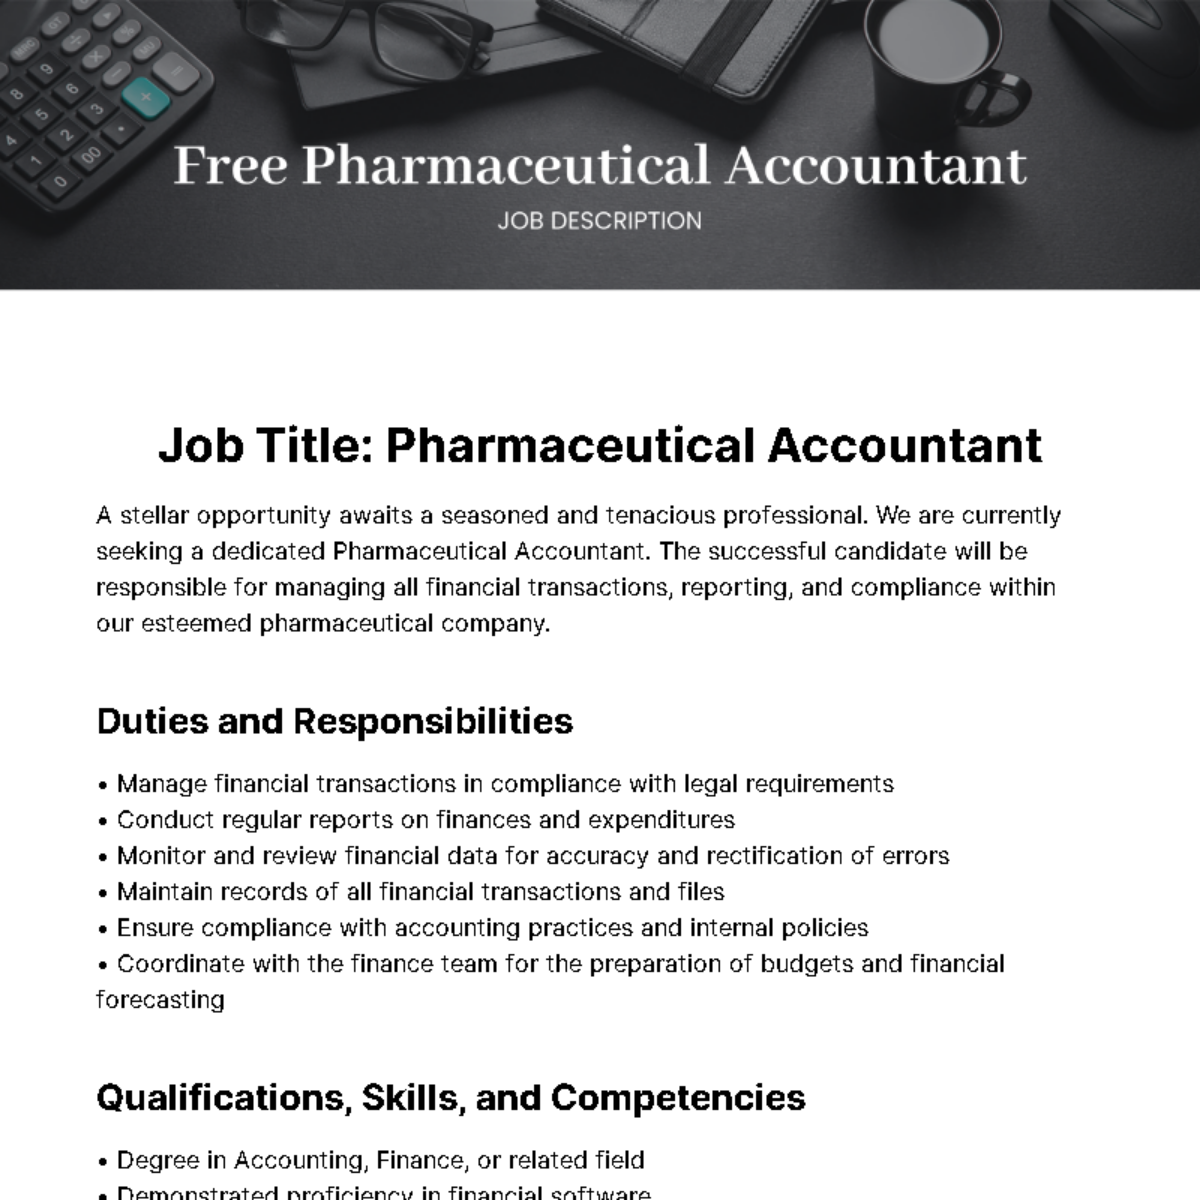 Free Pharmaceutical Accountant Job Description Template